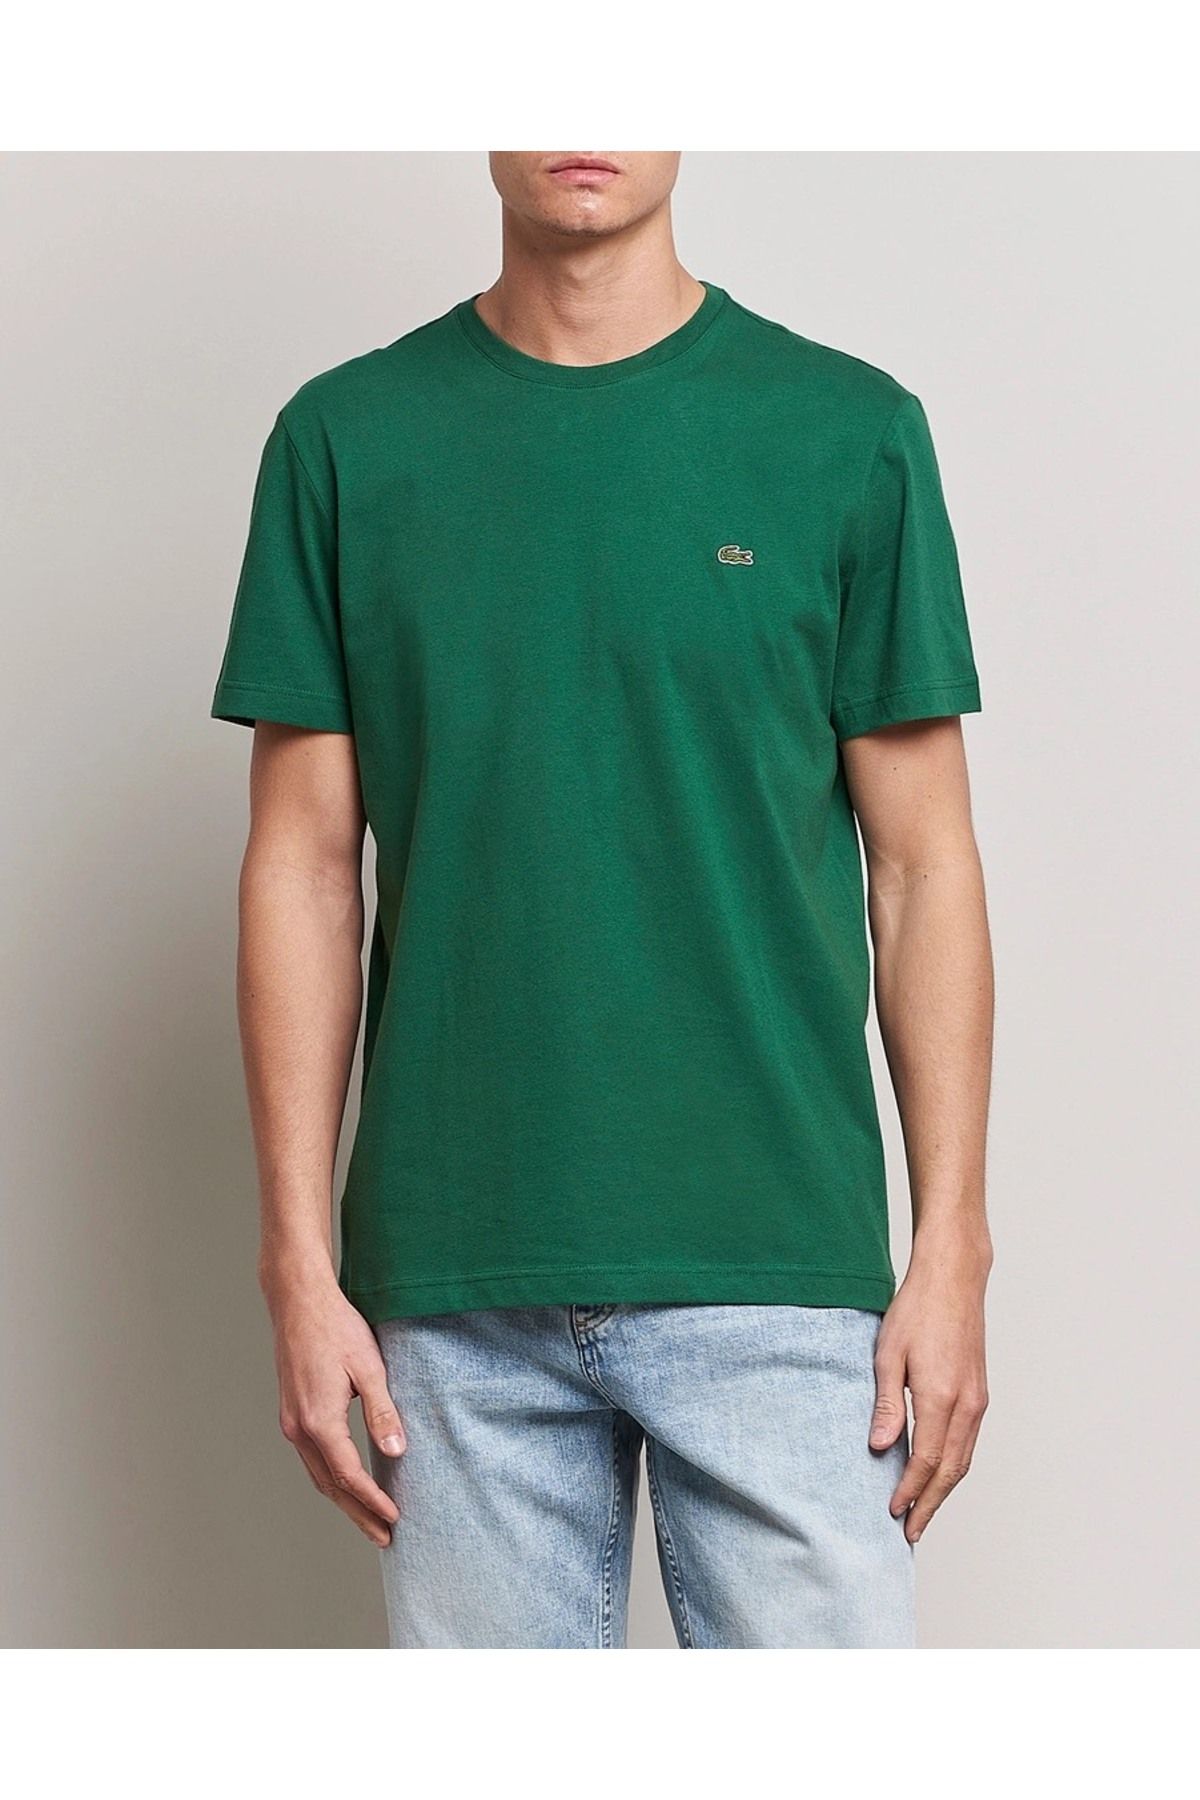 Lacoste Erkek Standart Fit Yeşil Bisiklet Yaka T-Shirt